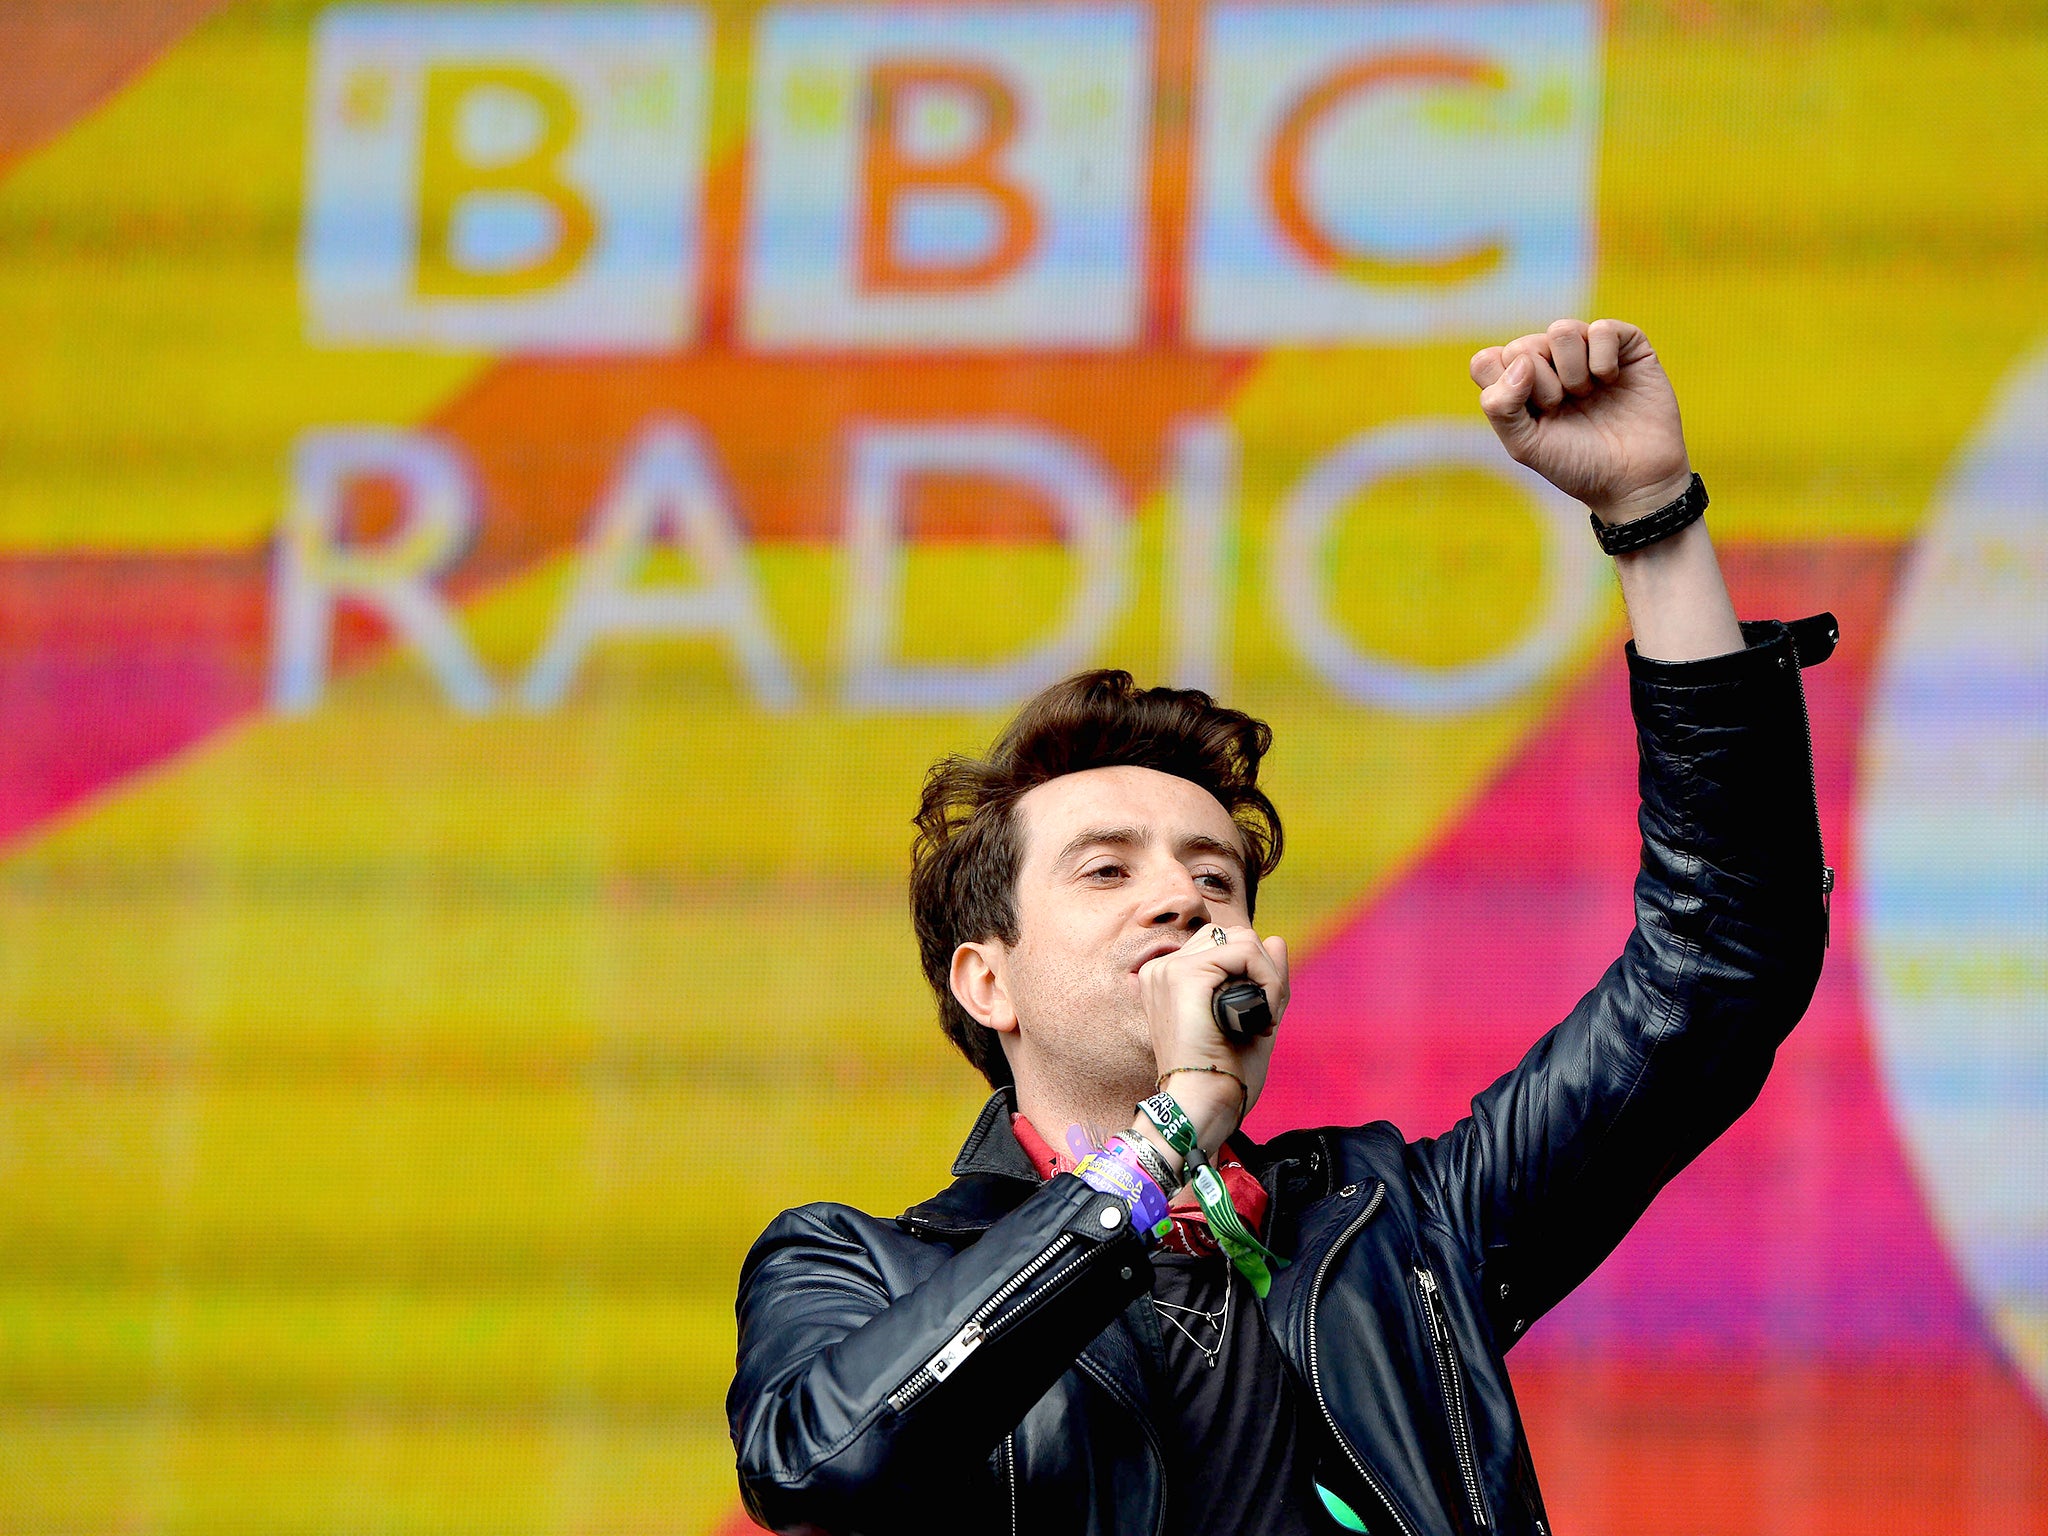 Nick Grimshaw during Radio 1’s Big Weekend in 2014